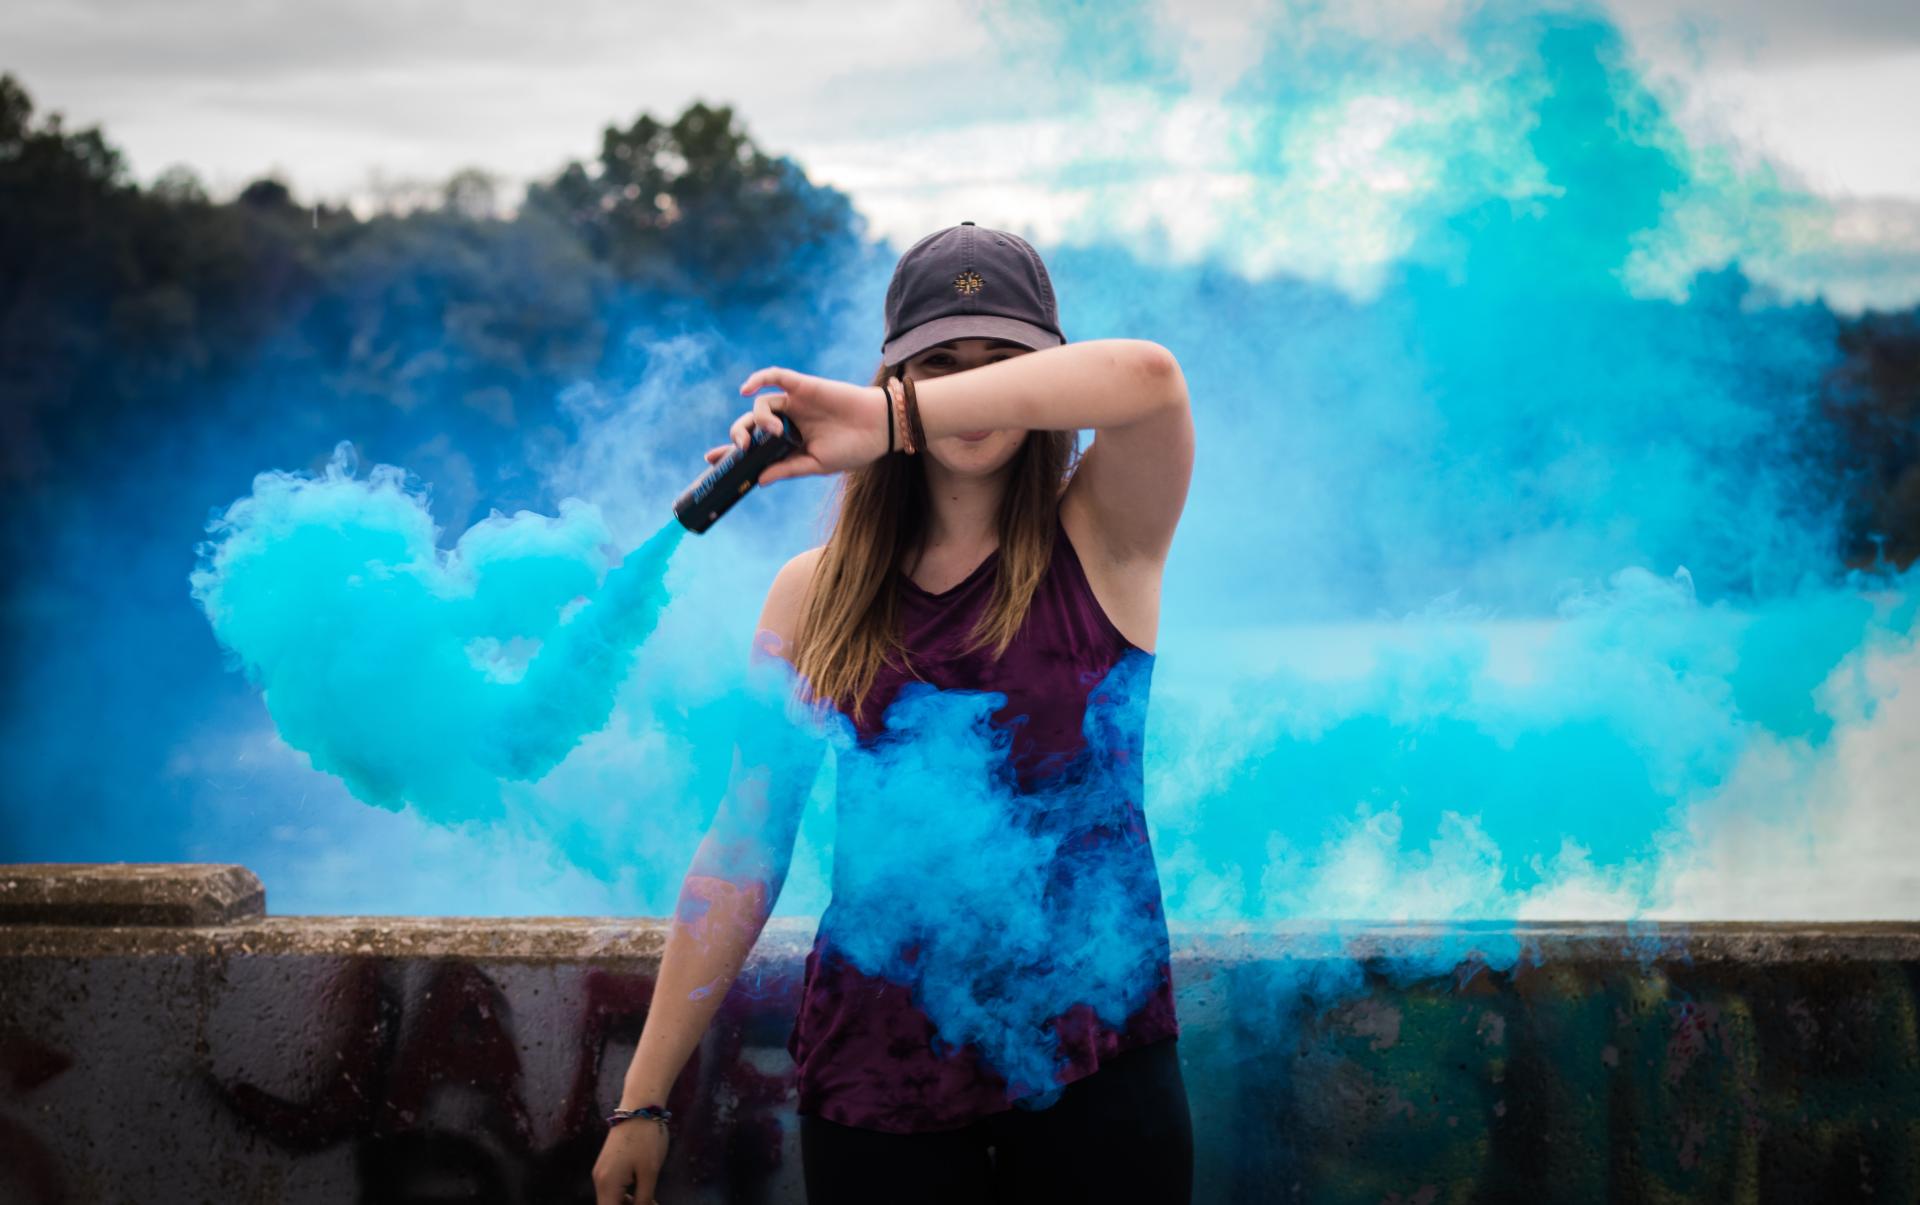 Ragazza con fumo blu photo by Trinity Kubassek